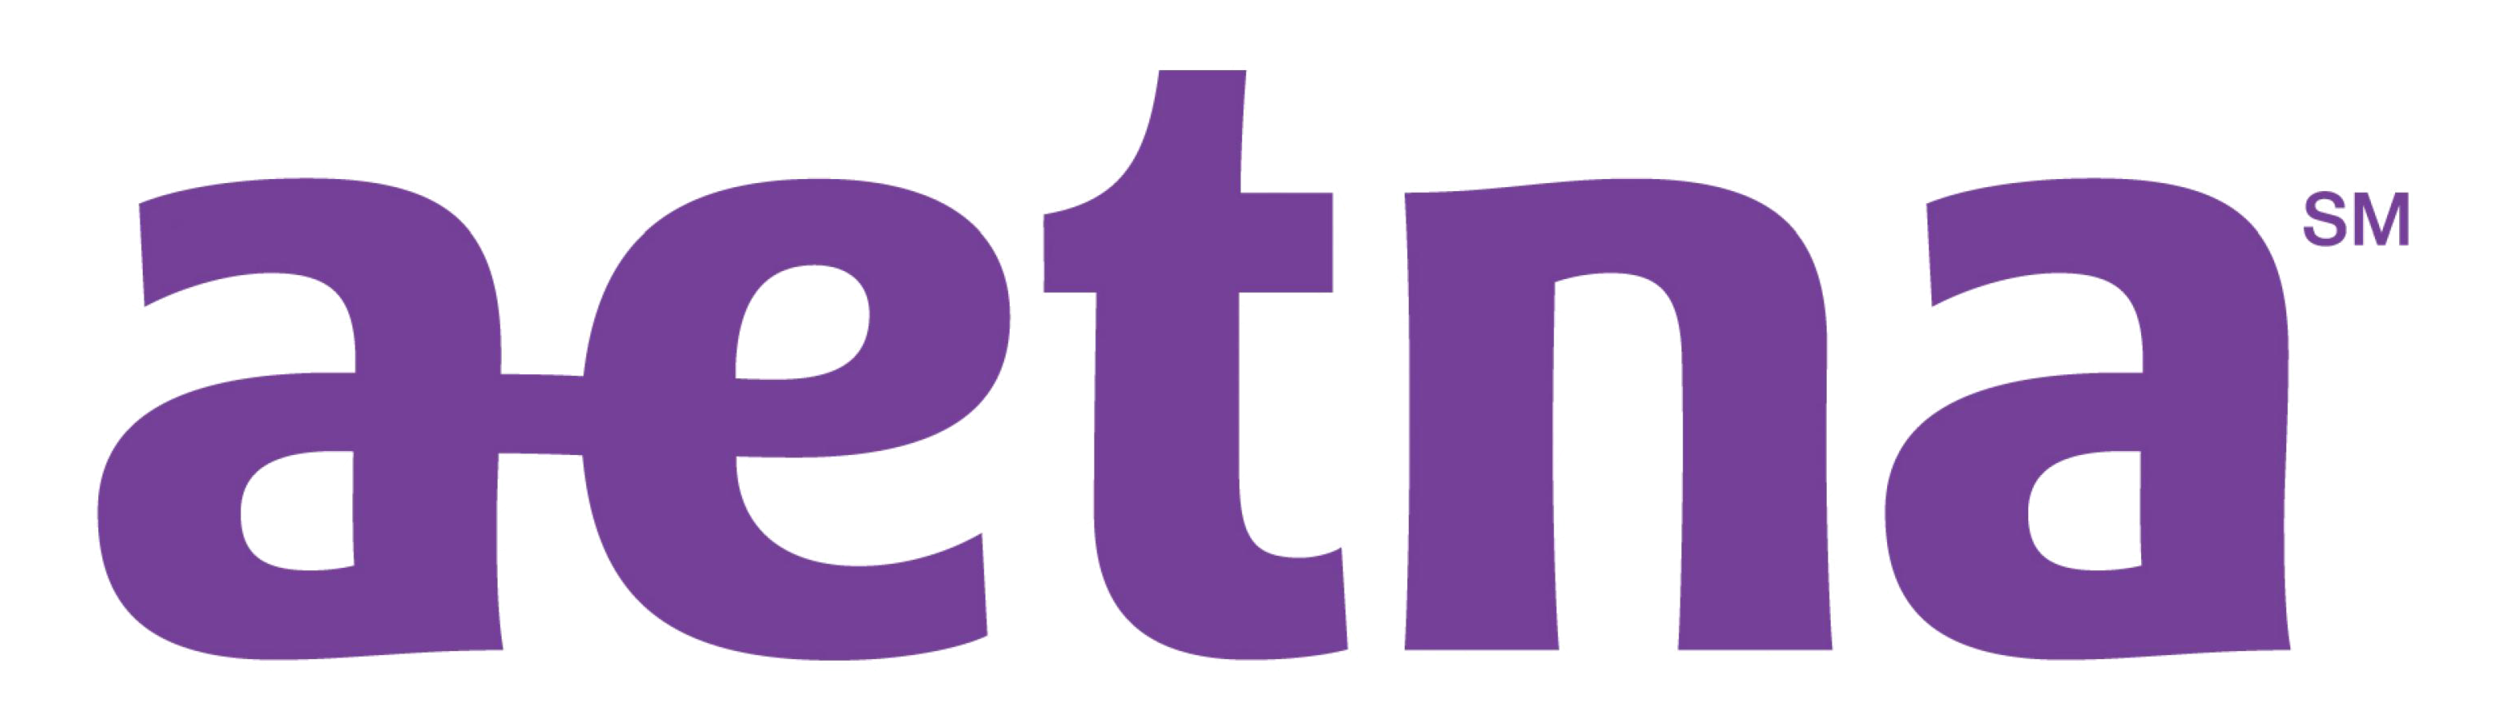 Aetna-Logo-PNG-Transparent-2.png